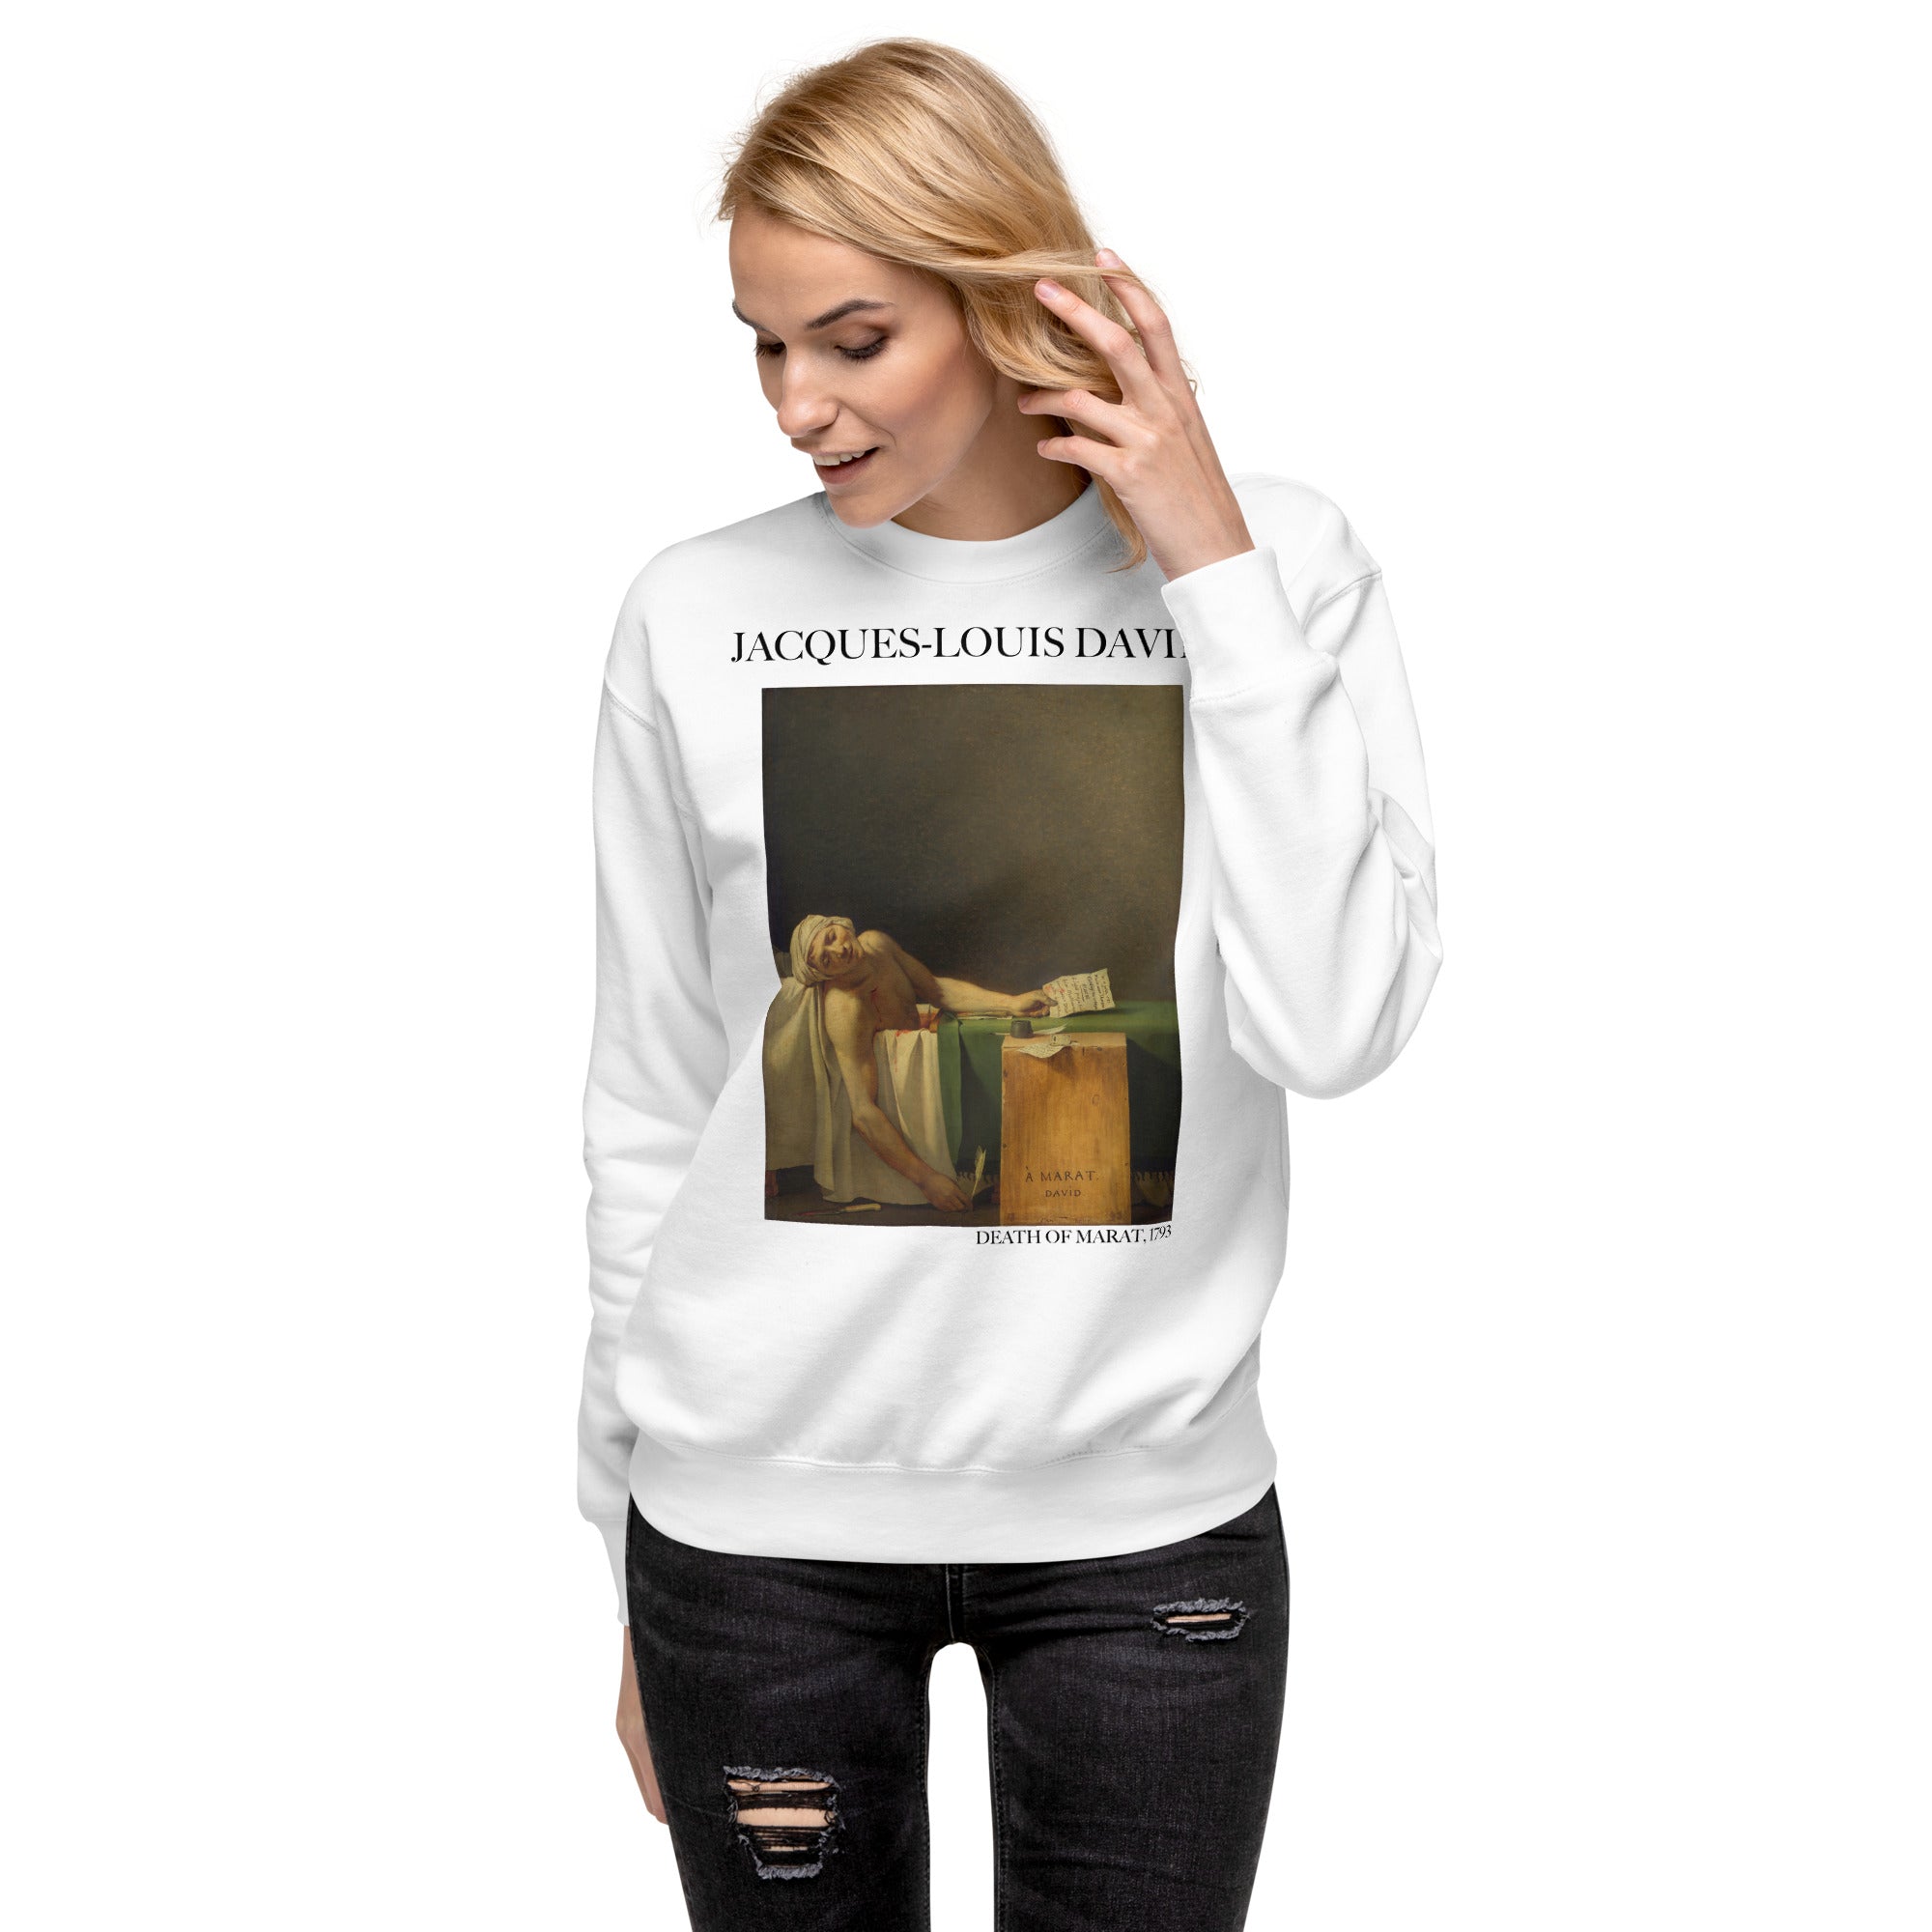 Jacques-Louis David 'Death of Marat' Famous Painting Sweatshirt | Unisex Premium Sweatshirt